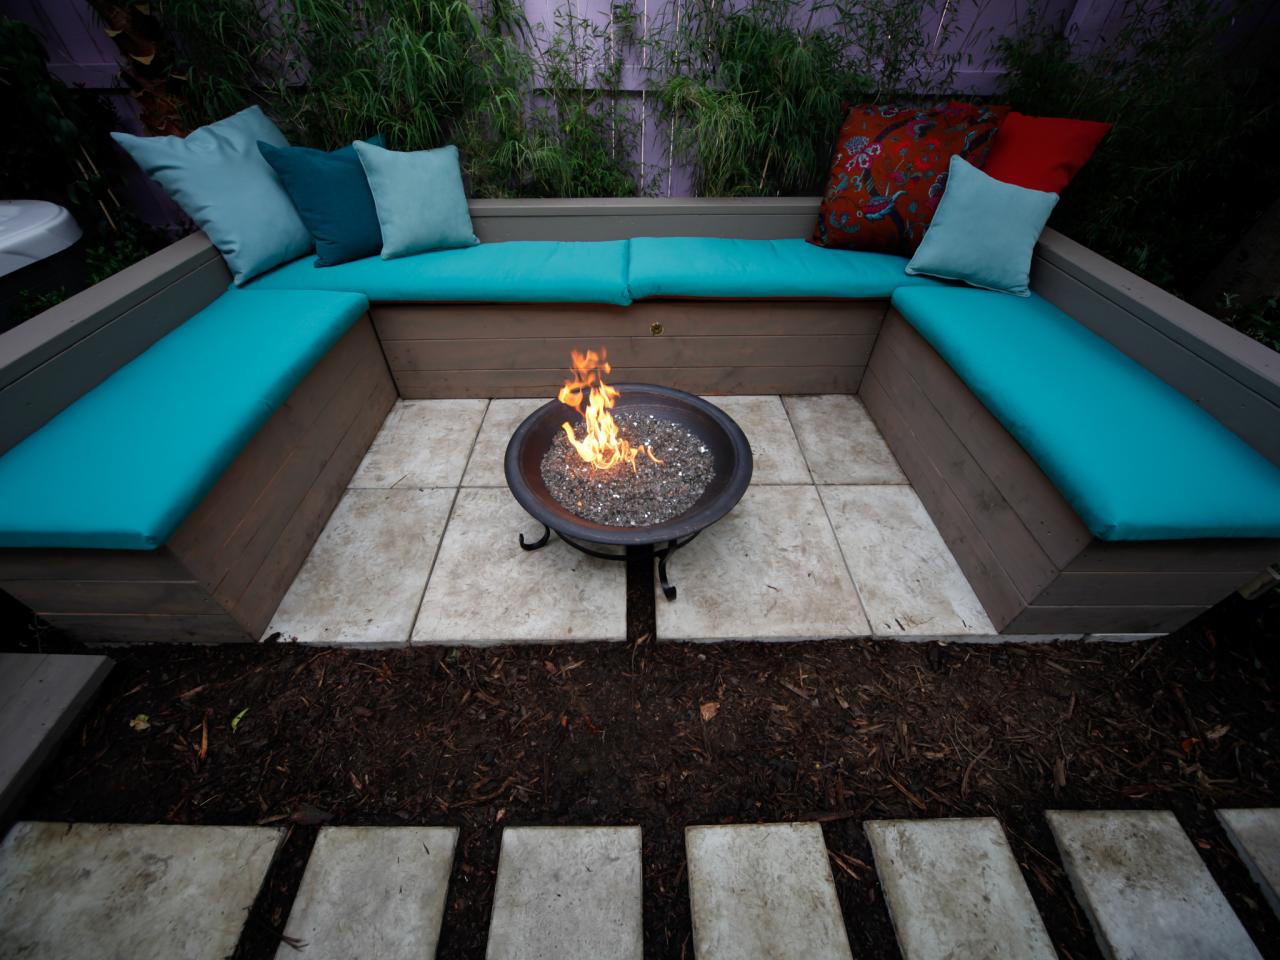 Fire Pit Design Ideas | Outdoor Spaces - Patio Ideas ...